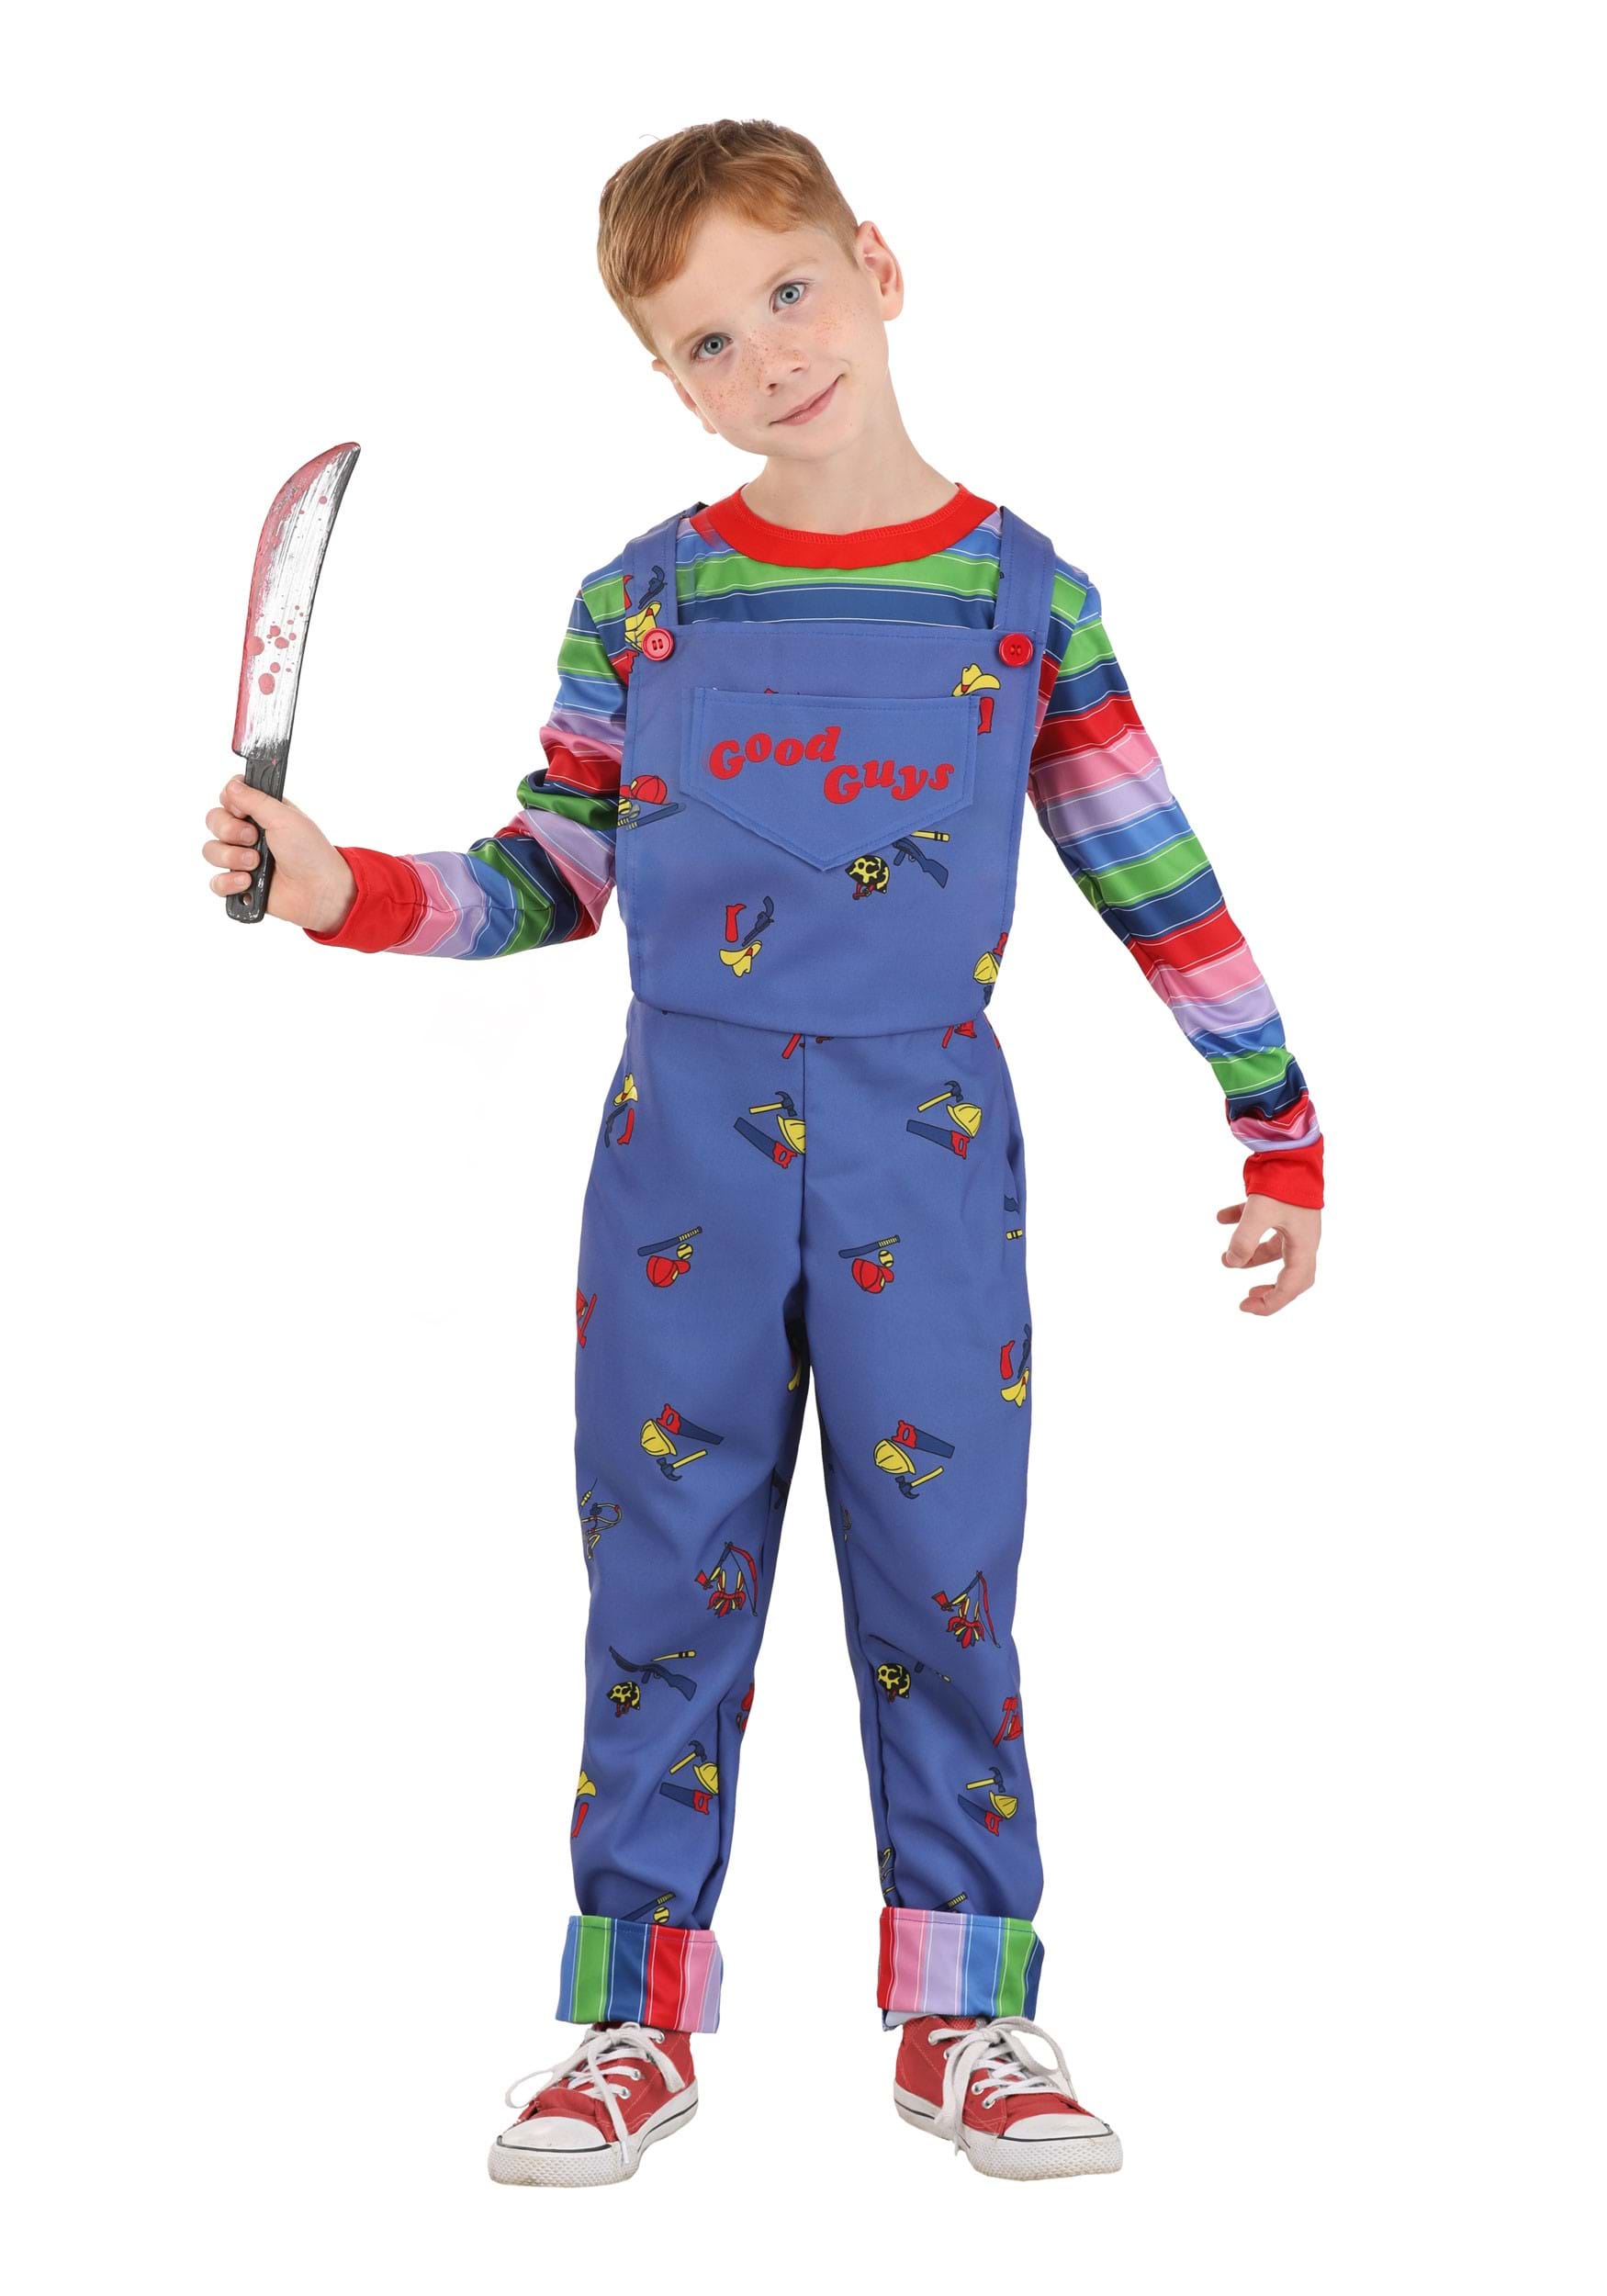 Child’s Play Boy’s Chucky Costume